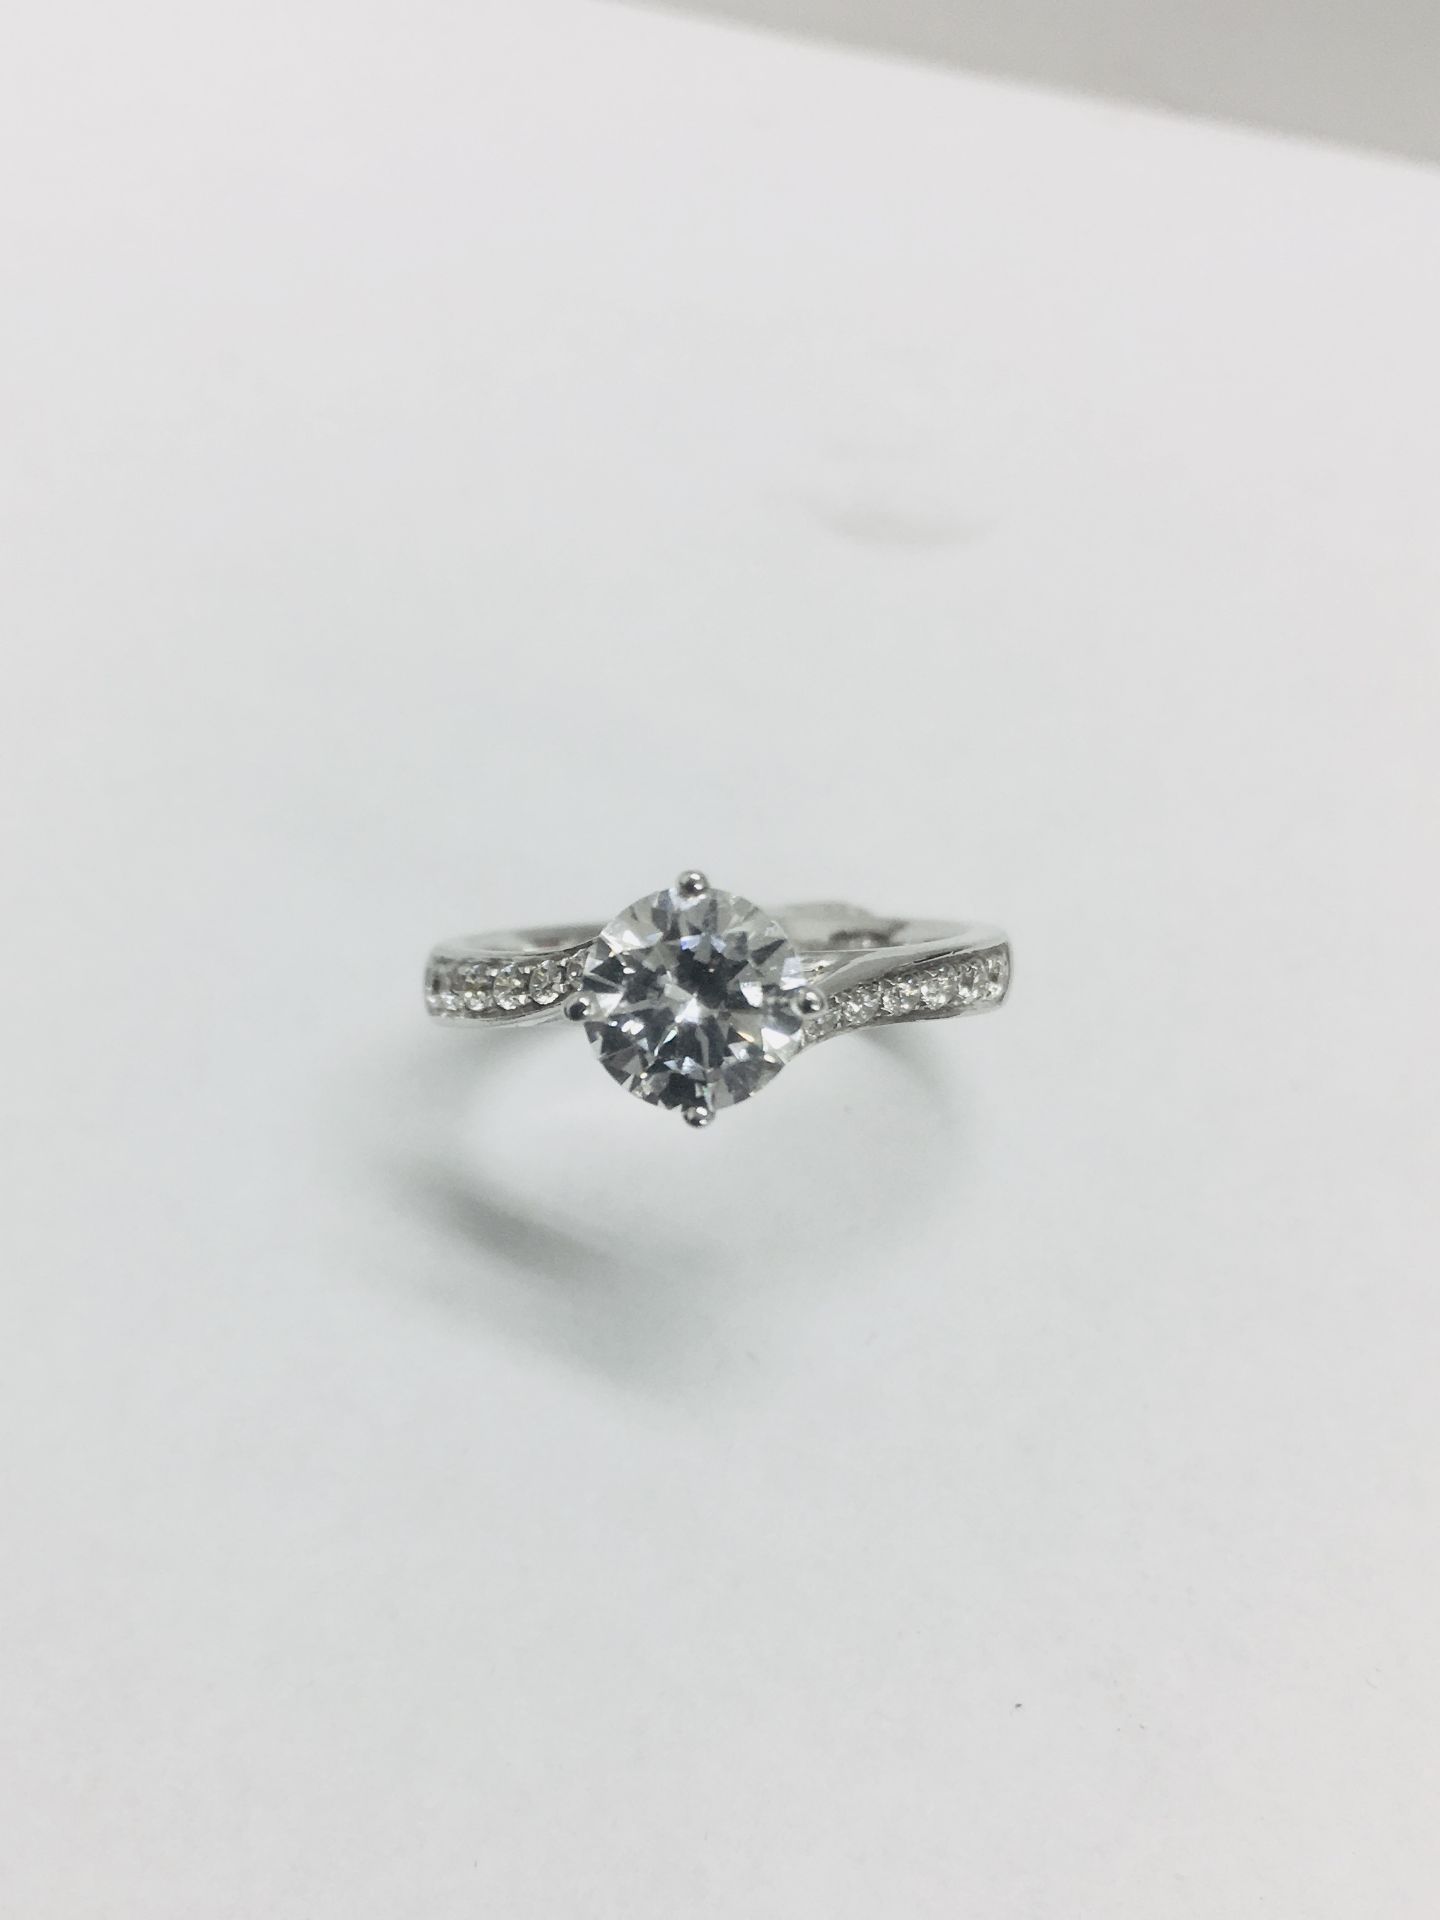 Platinum twist diamond solitaire ring,0.50ct brilliant cut diamond,D colour vs clarity,,3.5 gms - Image 6 of 7